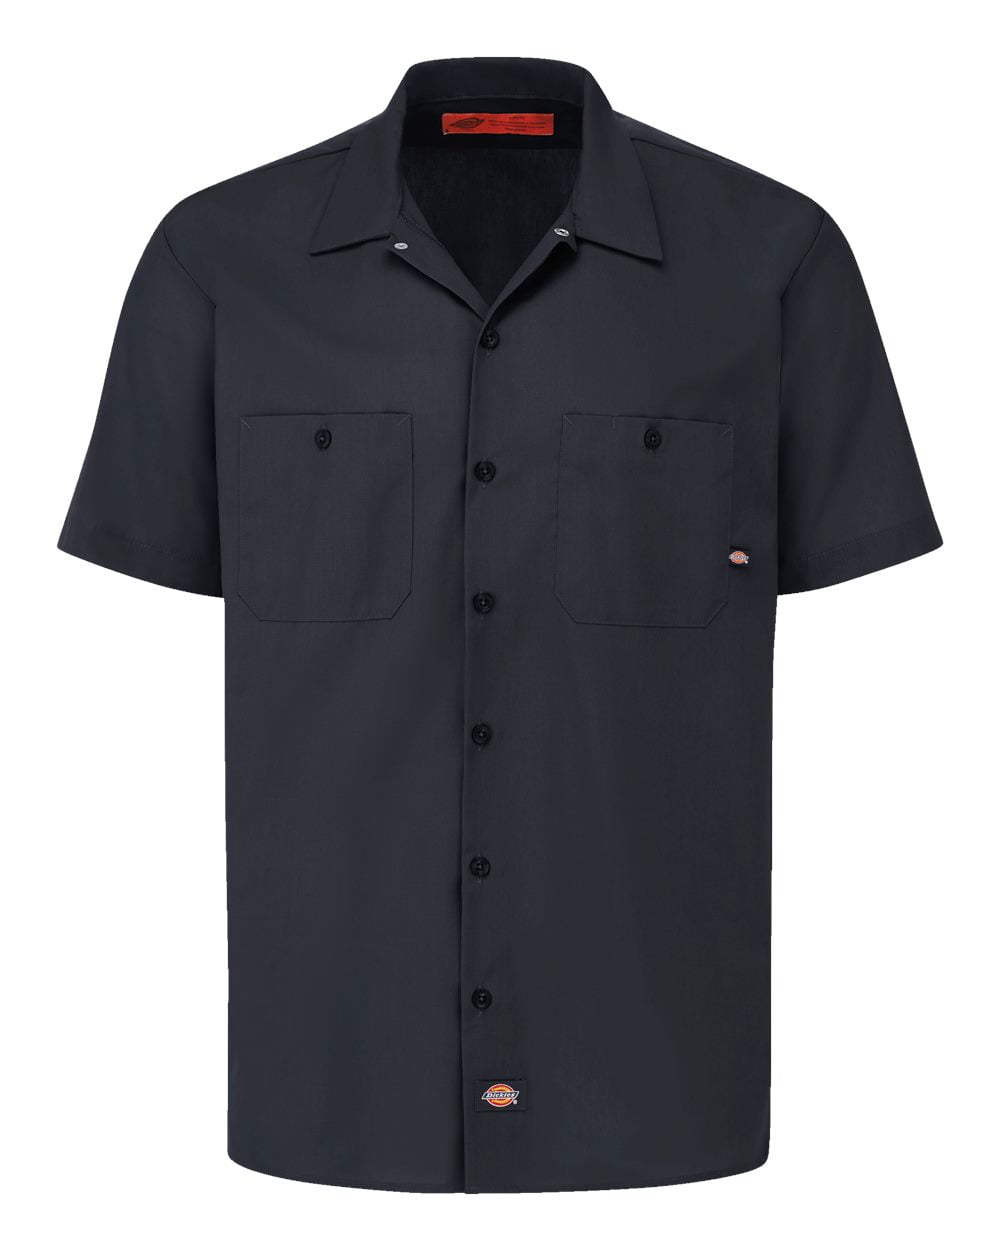 Mens Industrial Short Sleeve Work Shirt, Black - 3T - Walmart.com